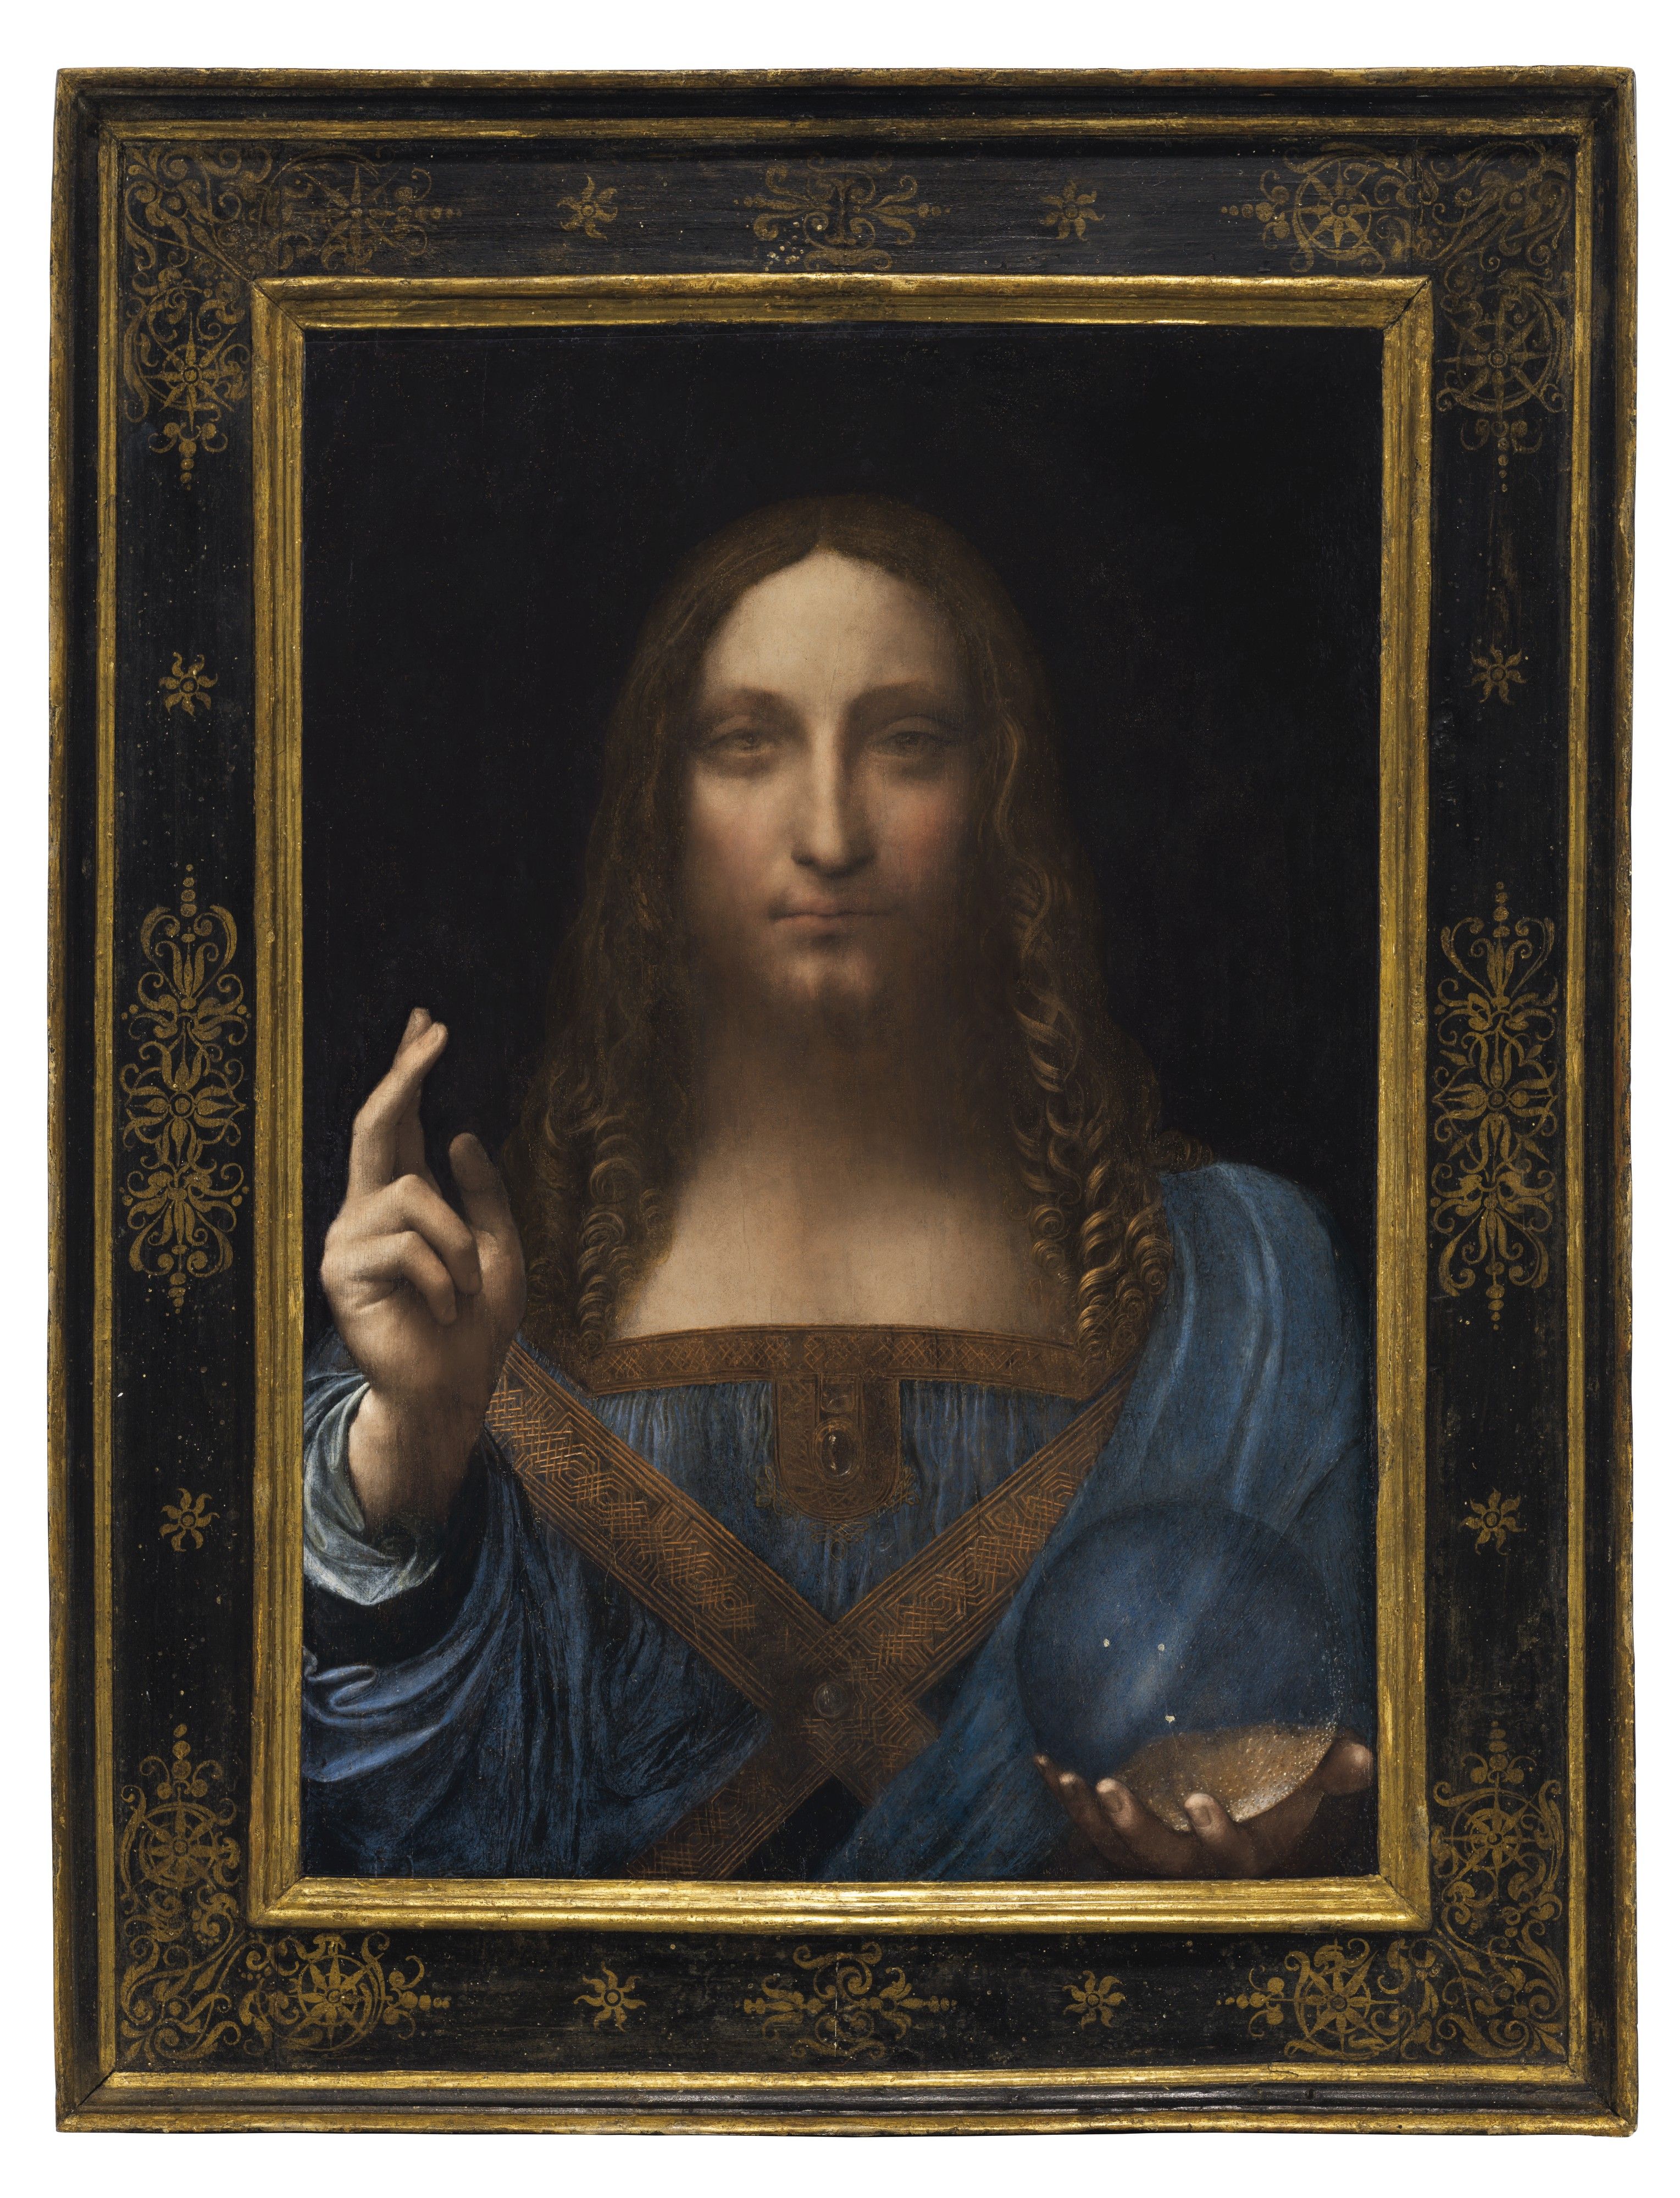 Rare Leonardo da Vinci painting sells for a record $450 million